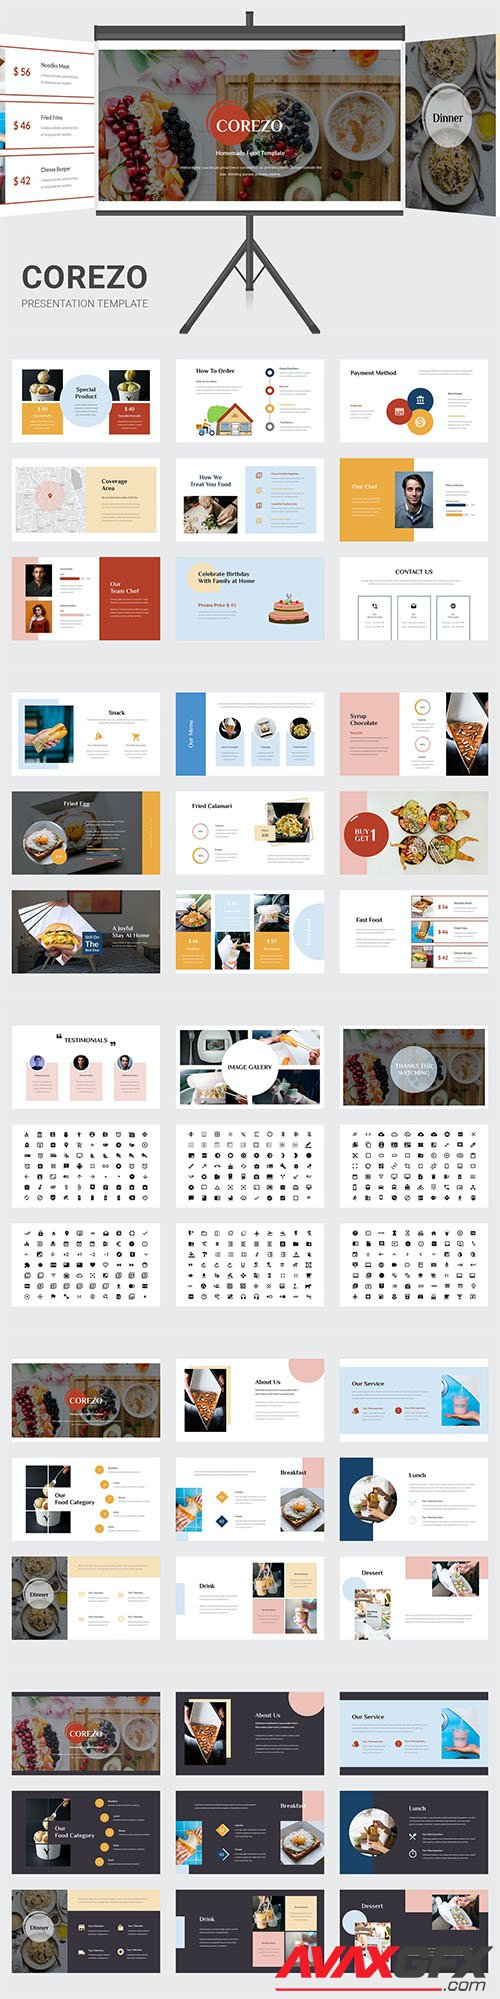 Corezo - Homemade Food Services PowerPoint, Keynote, Google Slides